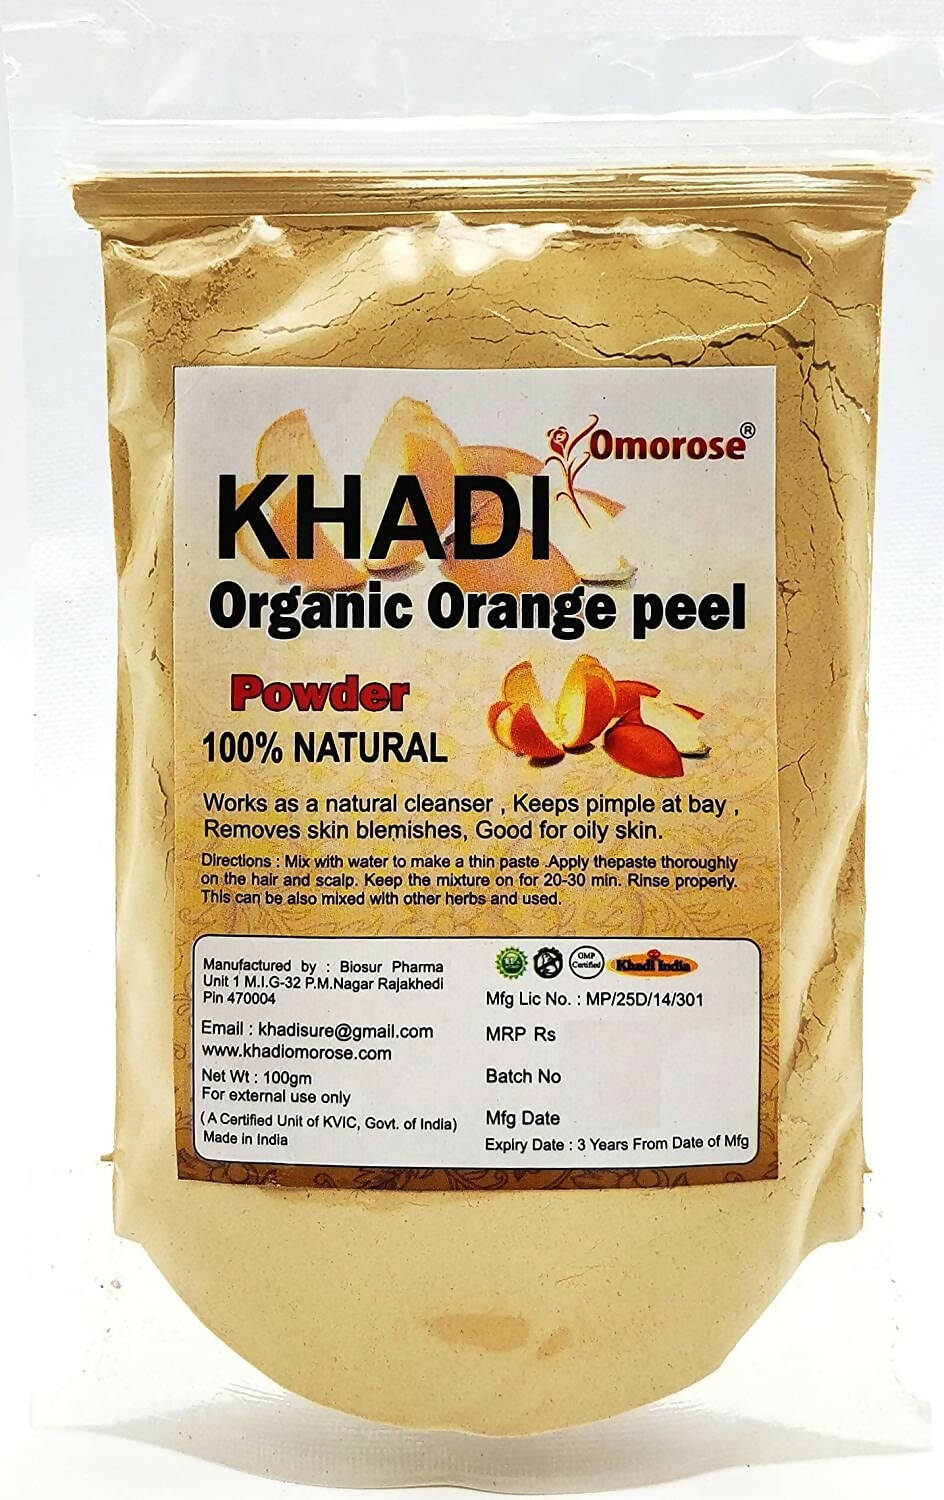 Khadi Omorose Orange Peel Powder